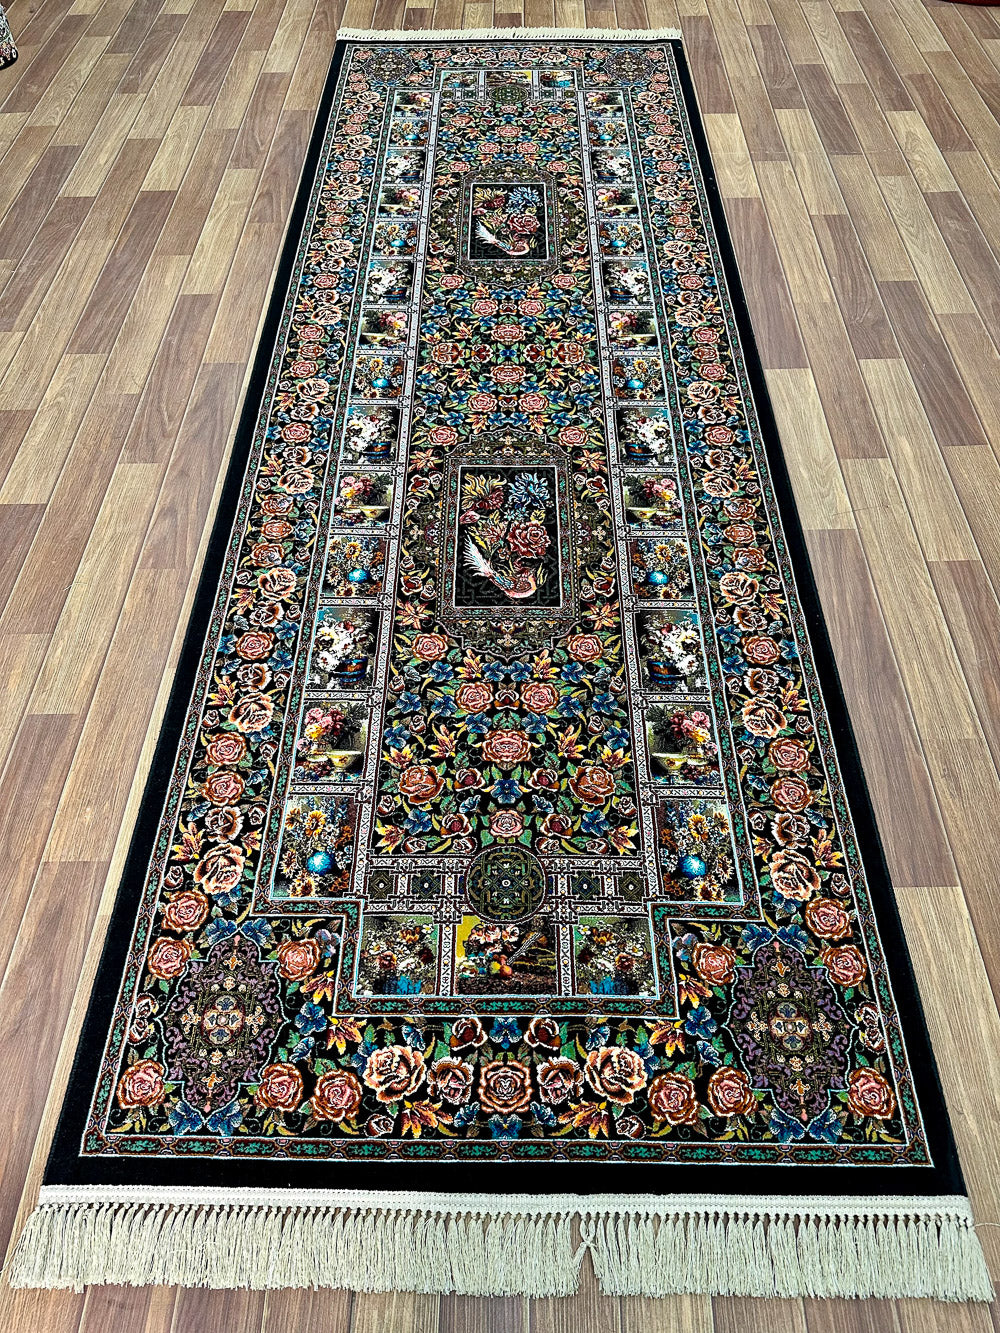 3 ft x 10 ft - Runner - Persian 1000 Reeds - Shahkar 4 - Black with Multi Colors